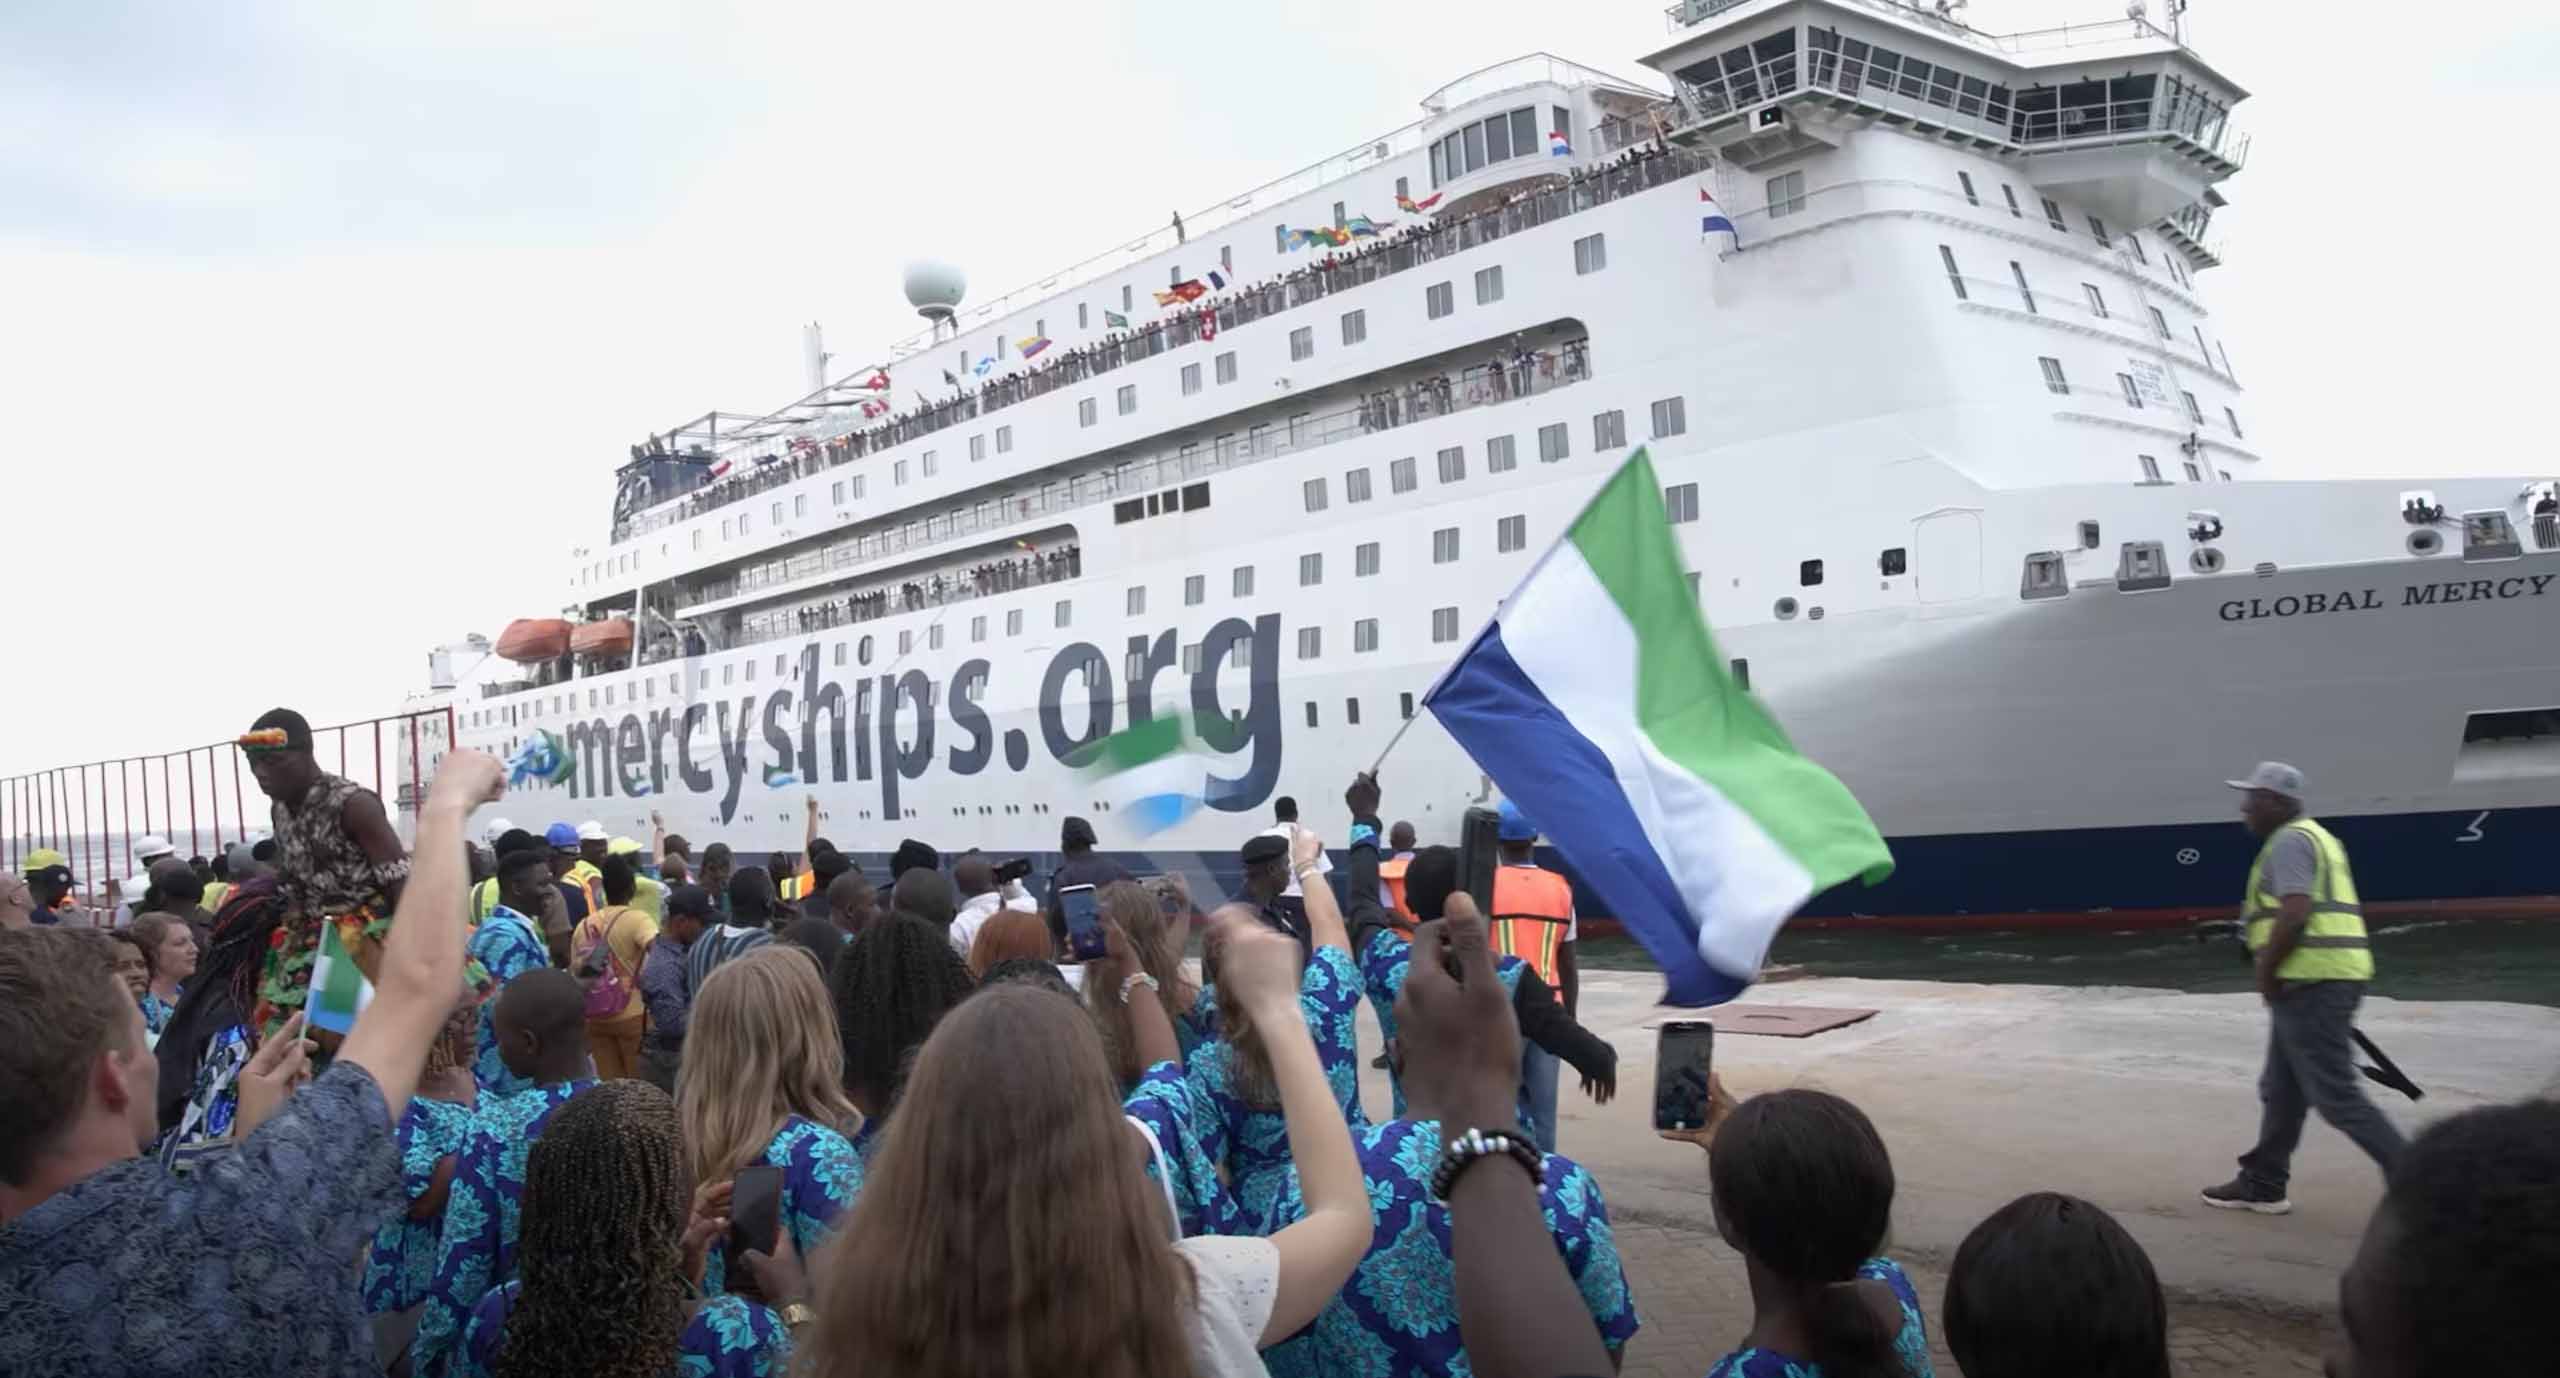 Sierra Leoneans Welcome The Global Mercy